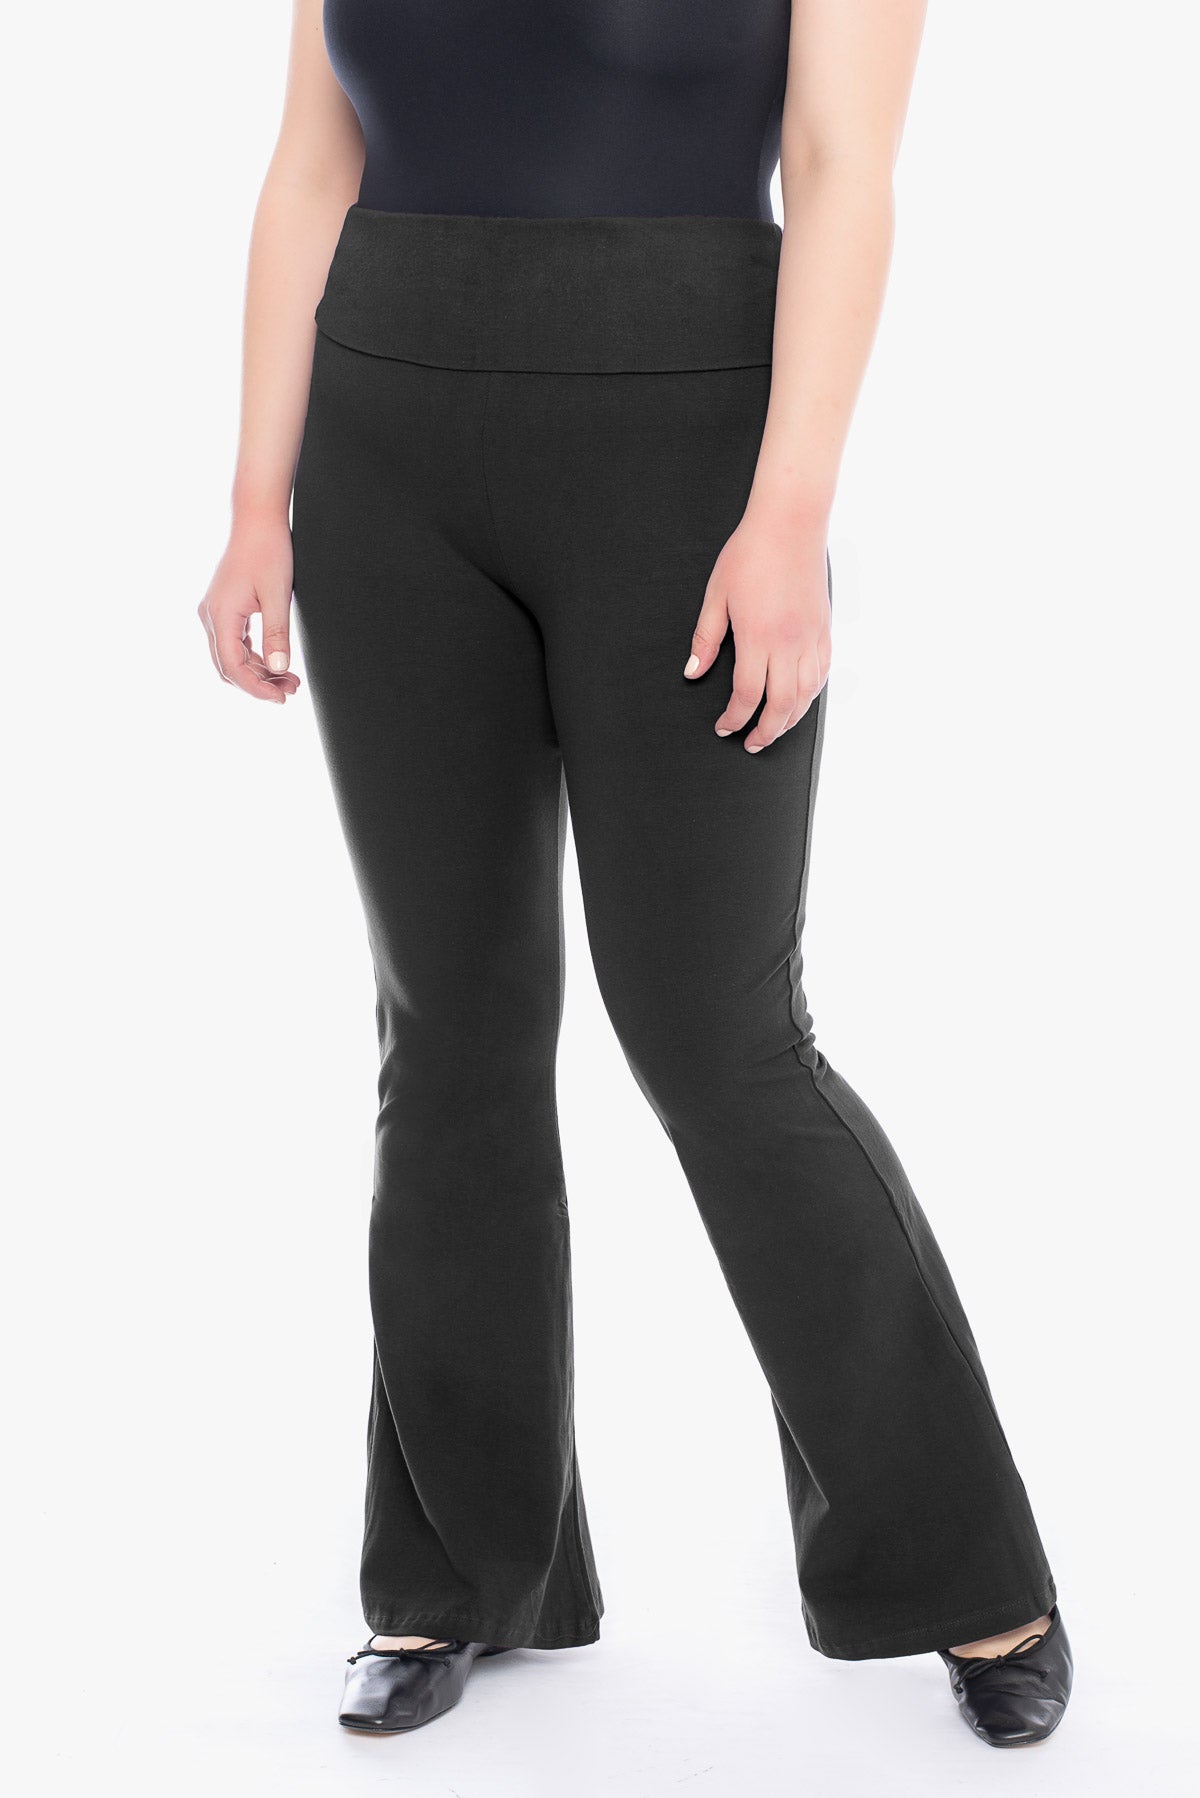 Women'S Pants In Clearance JIOAKFA Women Plus Size Beading Ripped Plaid  Panel Elastic Waist Casual Leggings Pants Black Xl F3410 